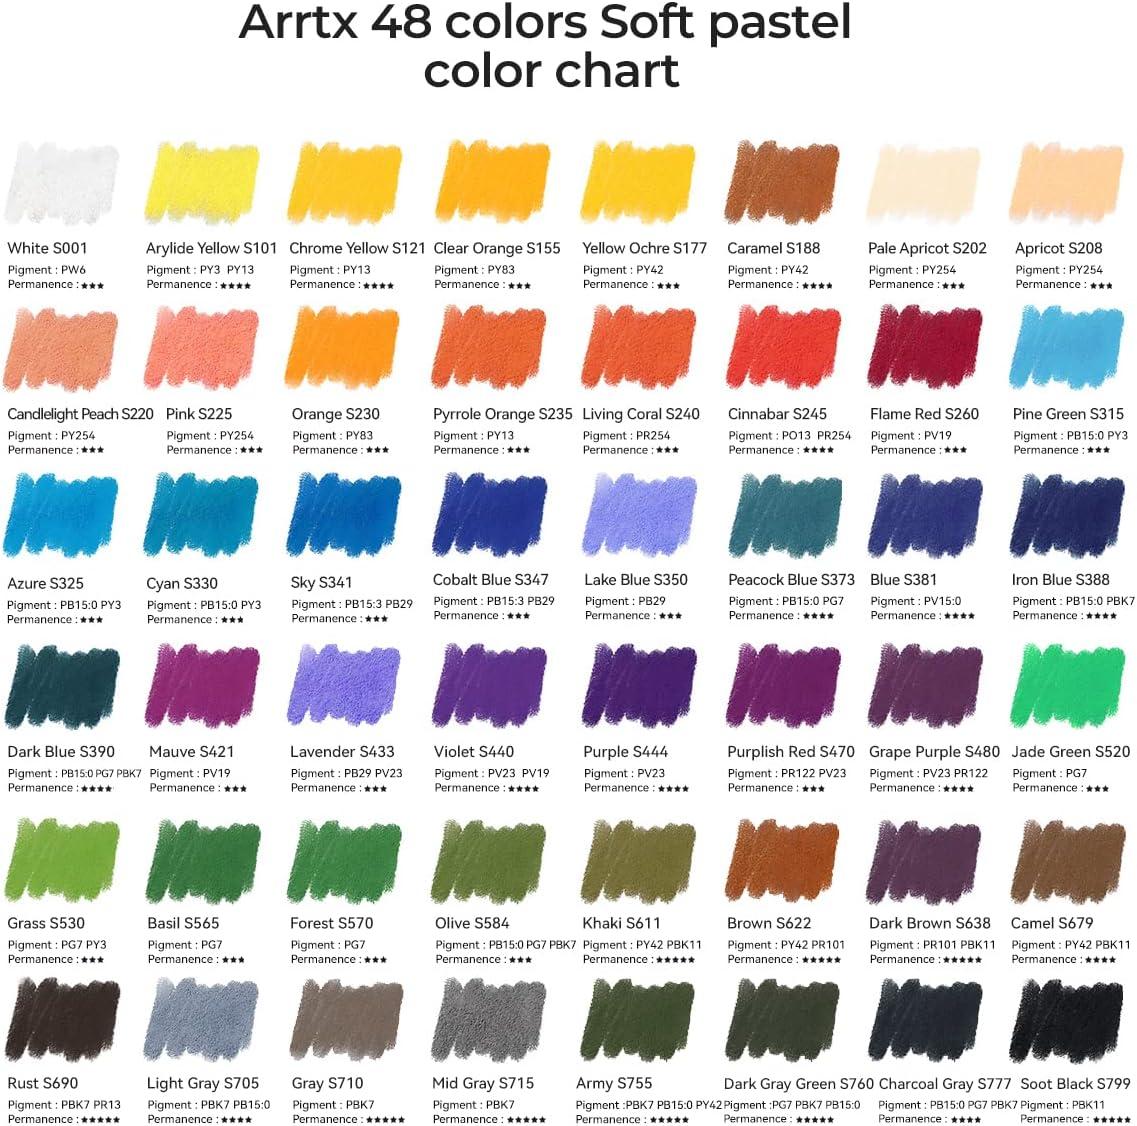 Azure Marker Set 7/Pkg-Pastel Colors